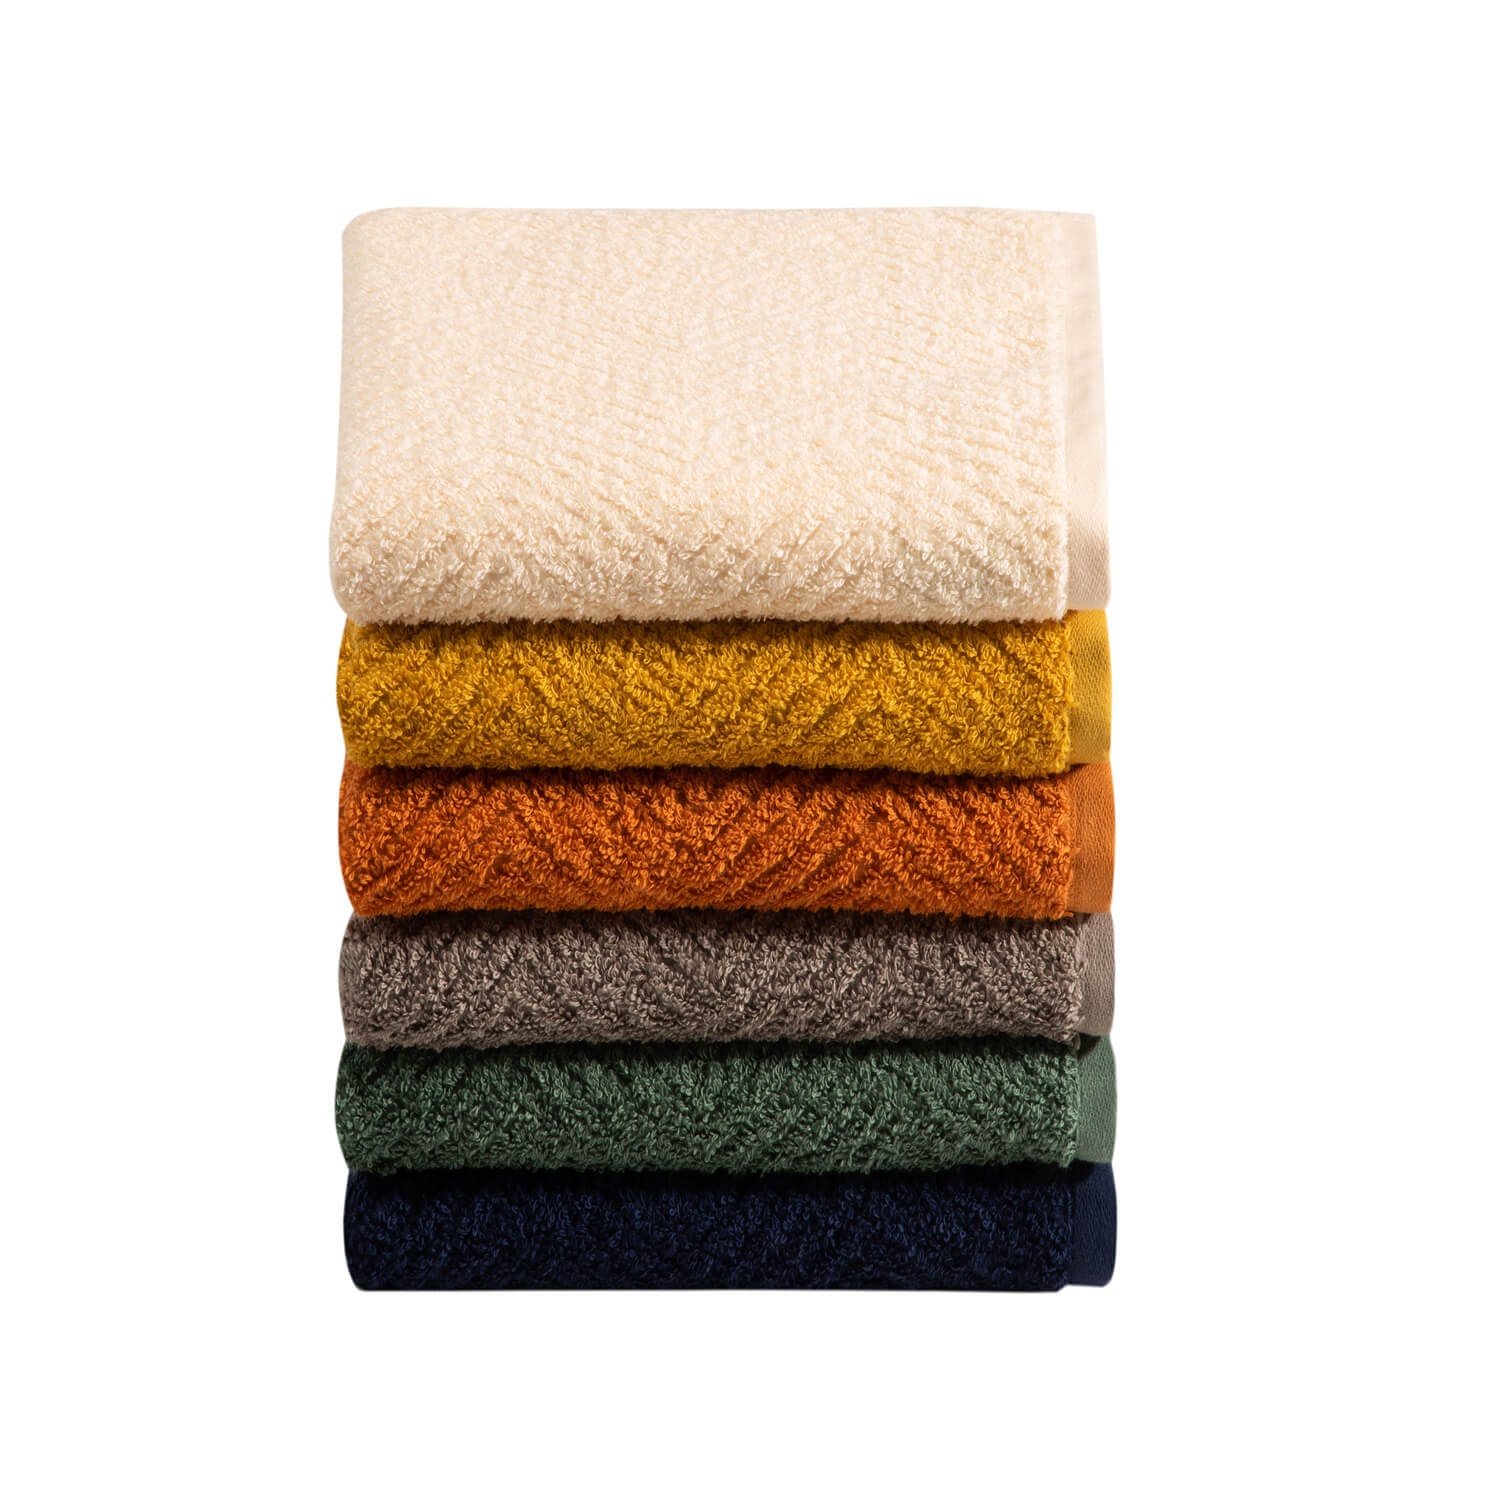 Vossen Dusk Towel - Camel 2 Shaws Department Stores